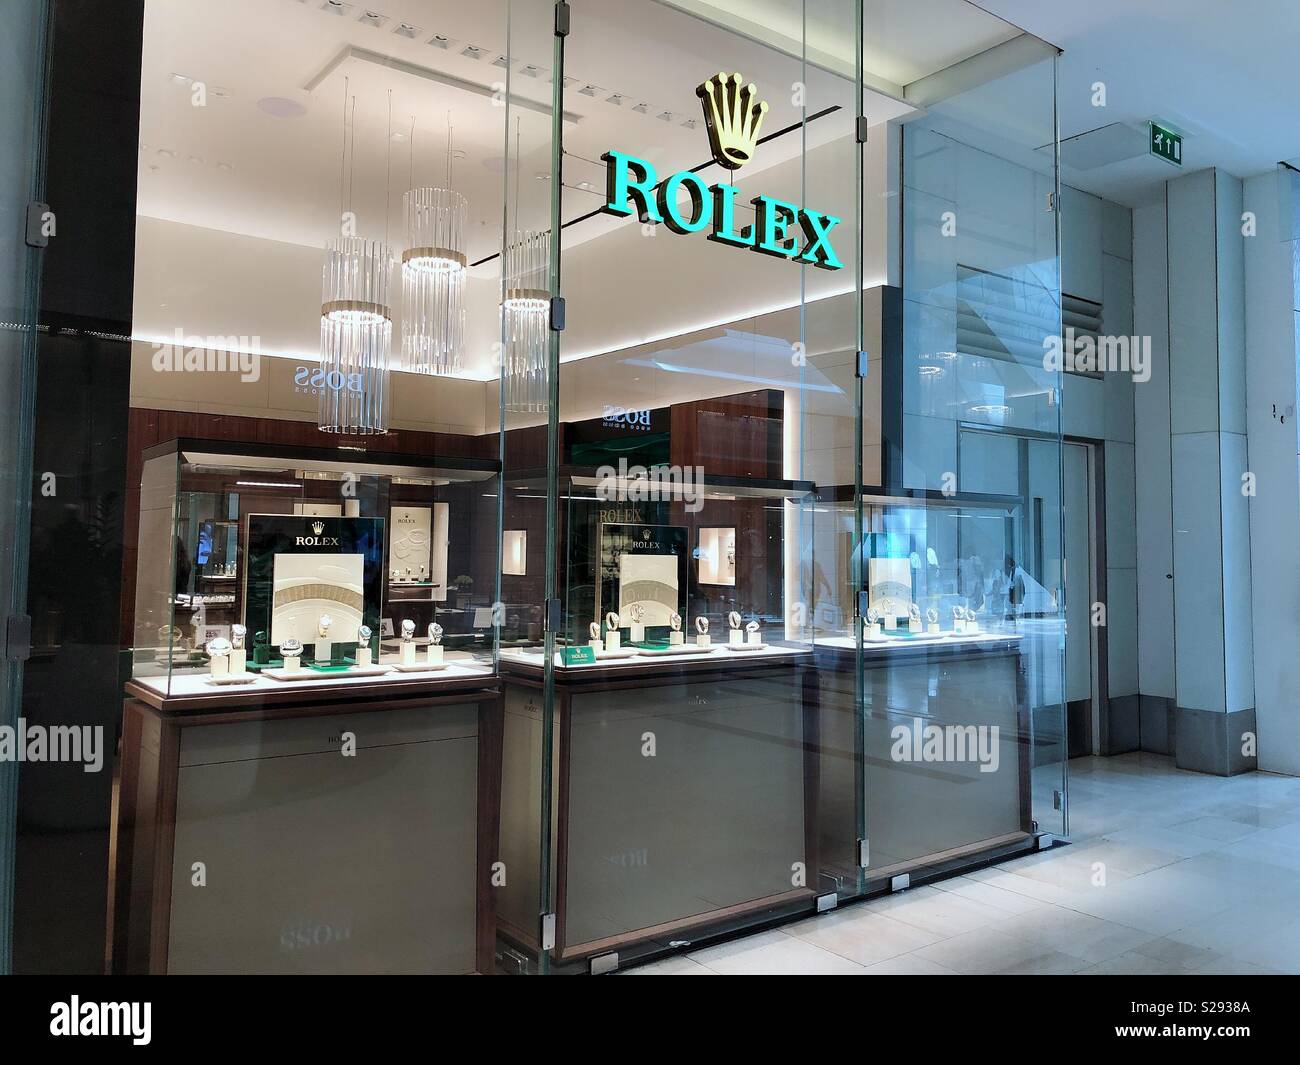 Rolex shop London Uk shopping center Westfield Stock Photo - Alamy